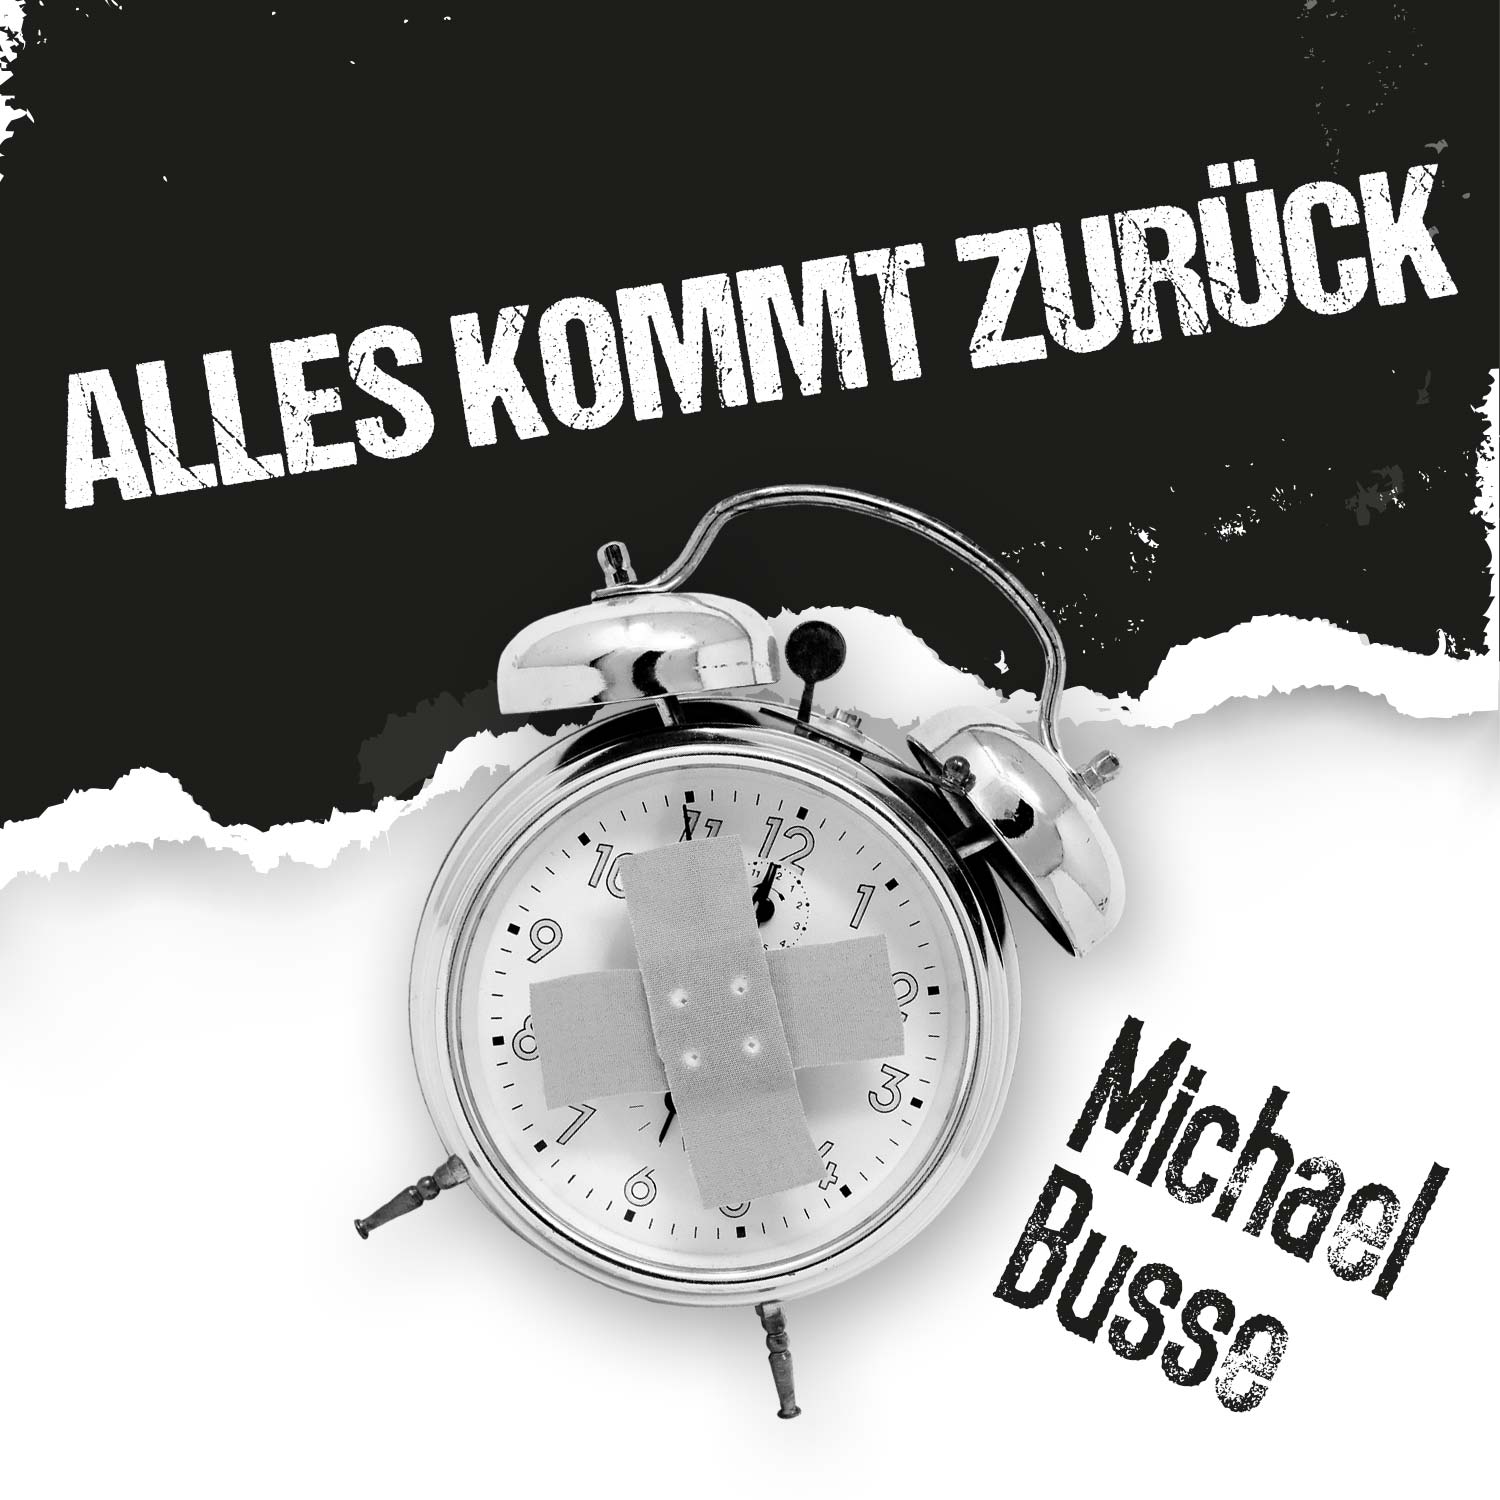 Michael Busse - Song - Alles kommt zurück